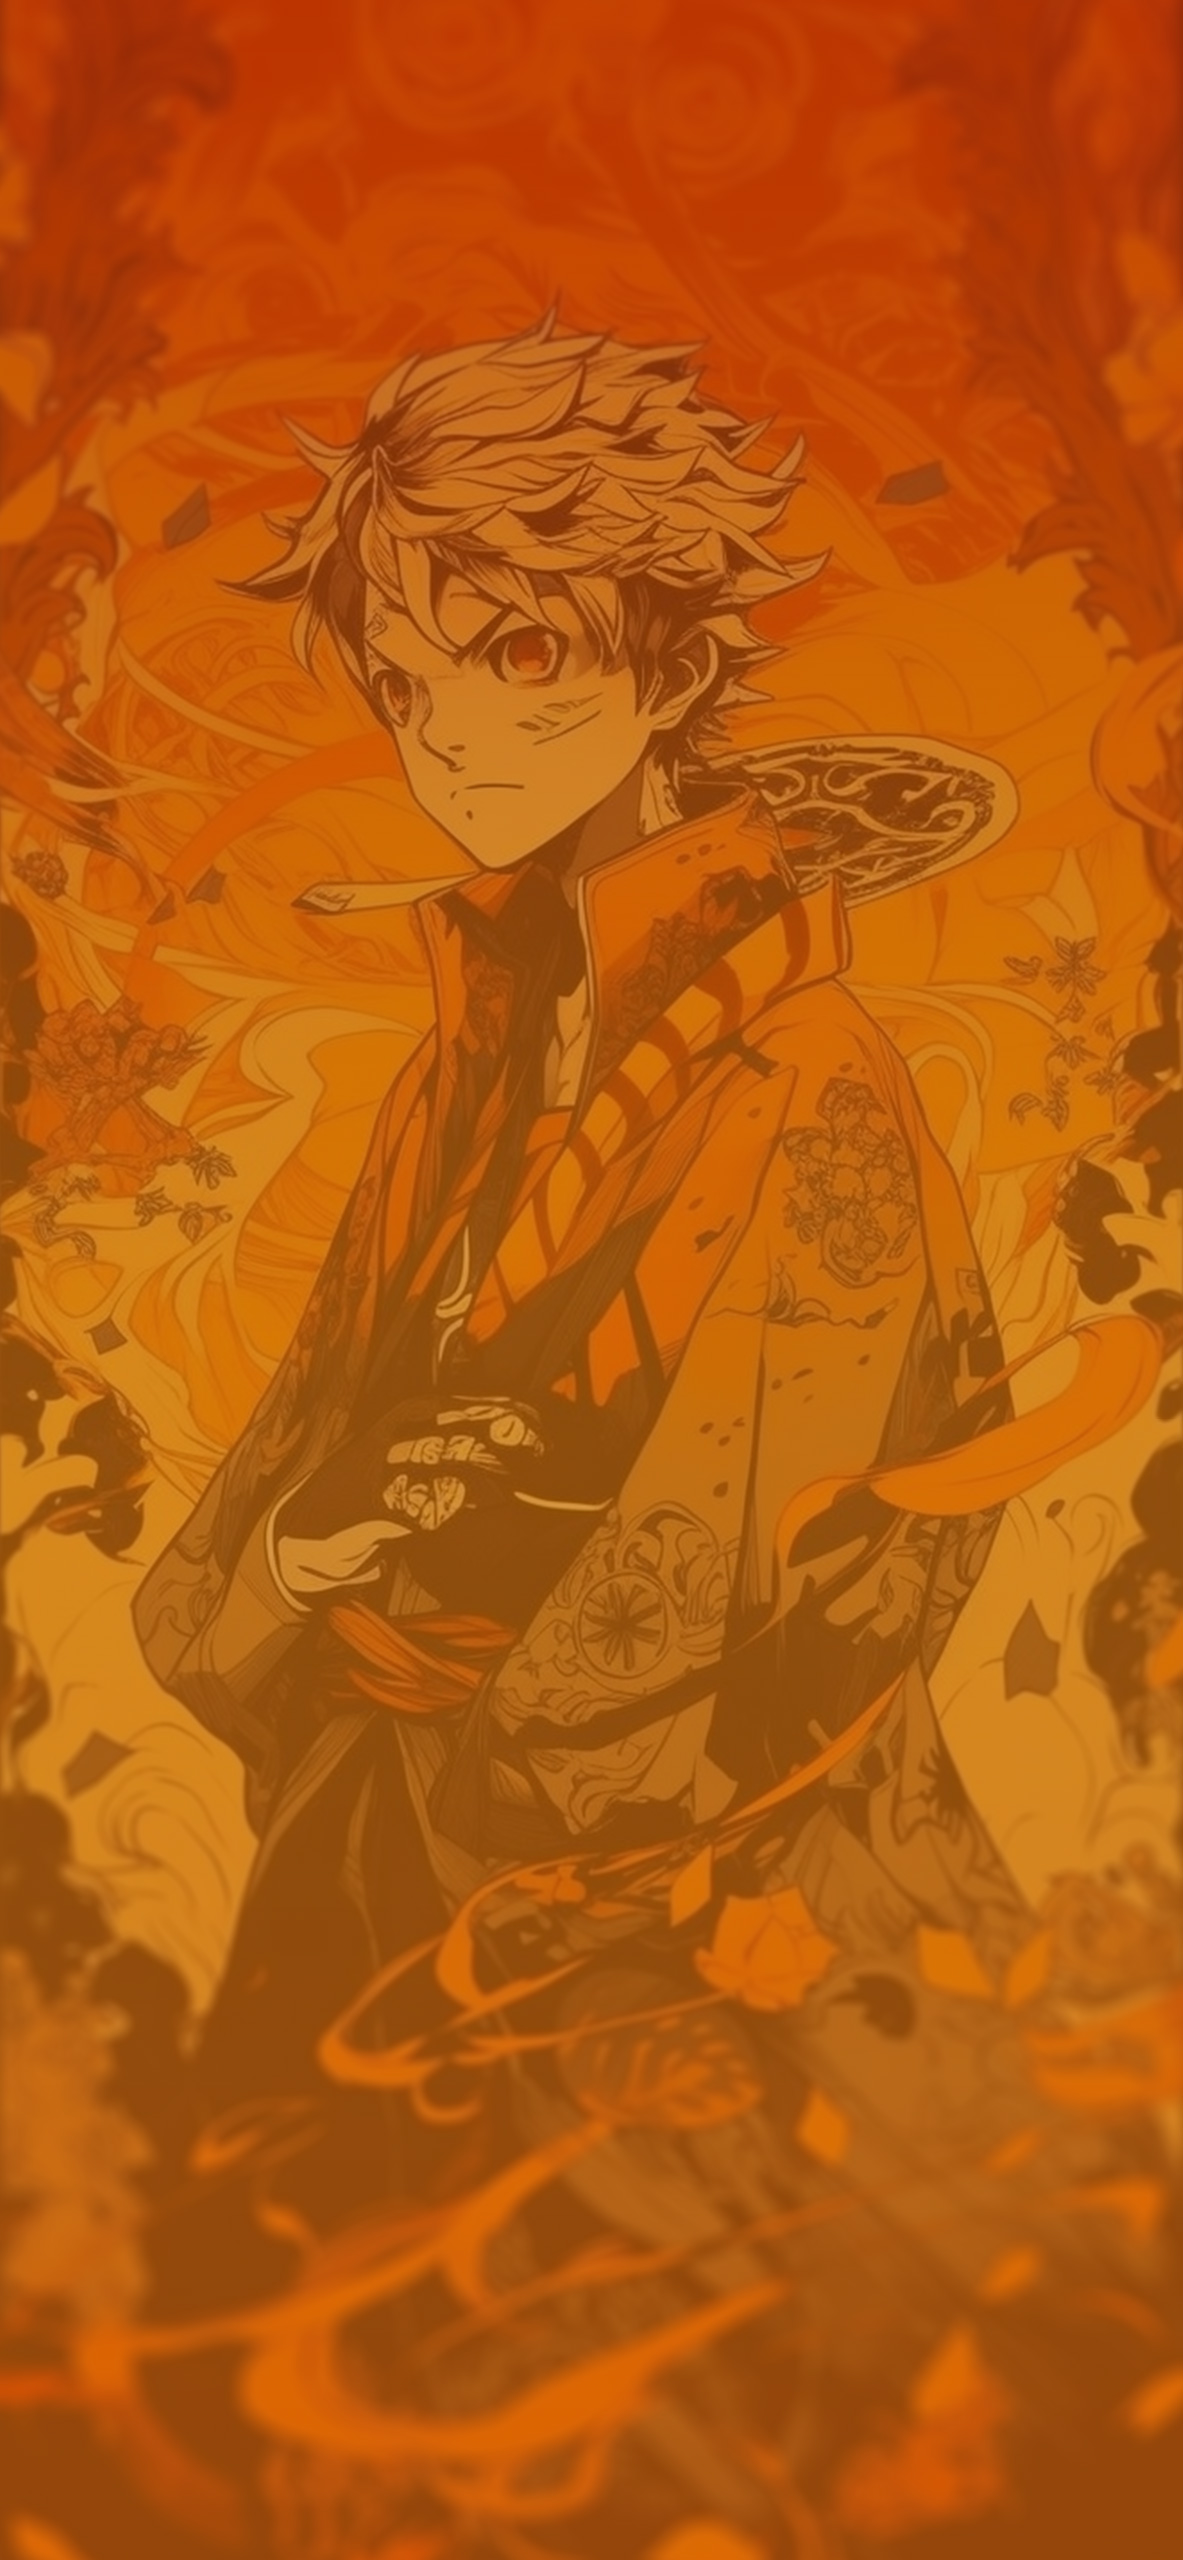 Zenitsu Agatsuma with sword from Demon Slayer Anime Wallpaper ID4039